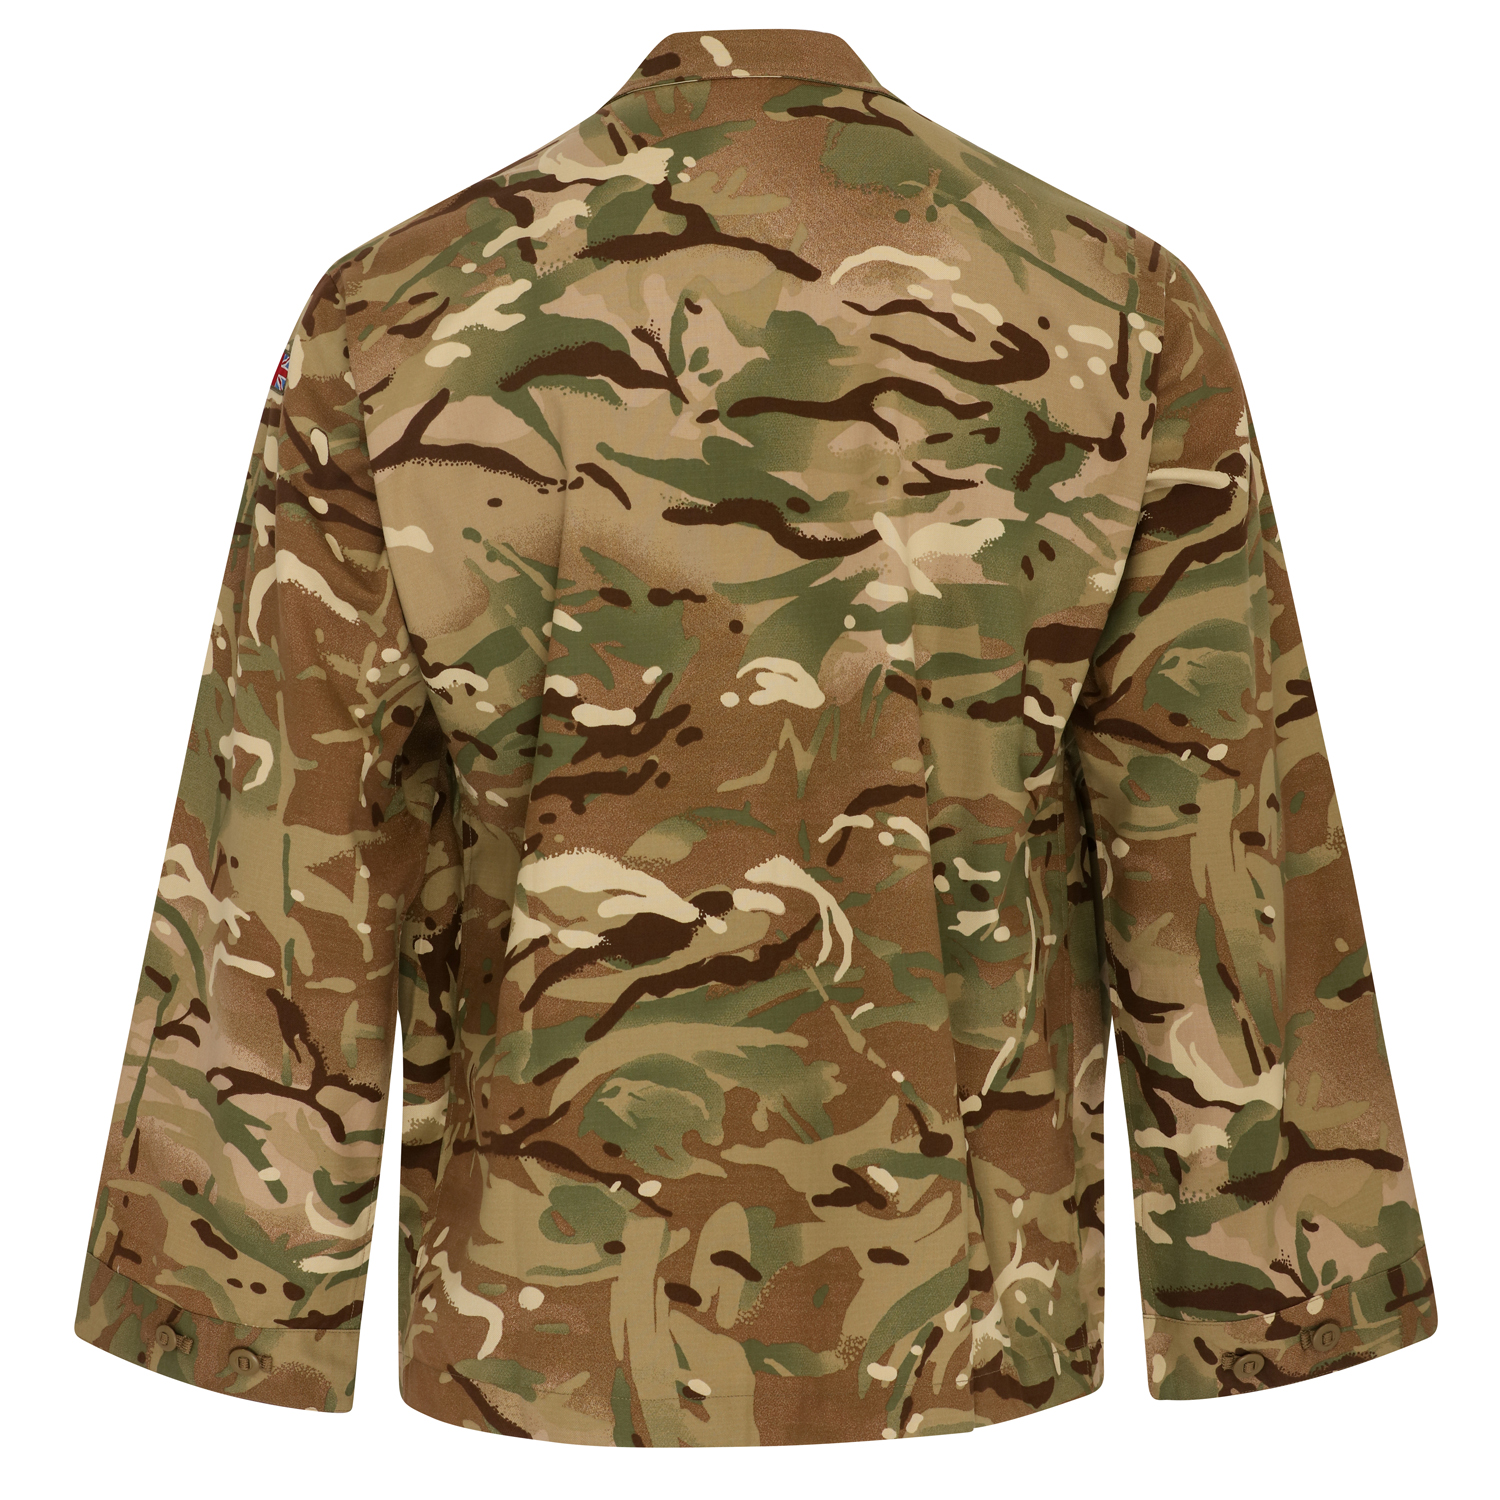 Used British MTP Barrack Shirt by British Army